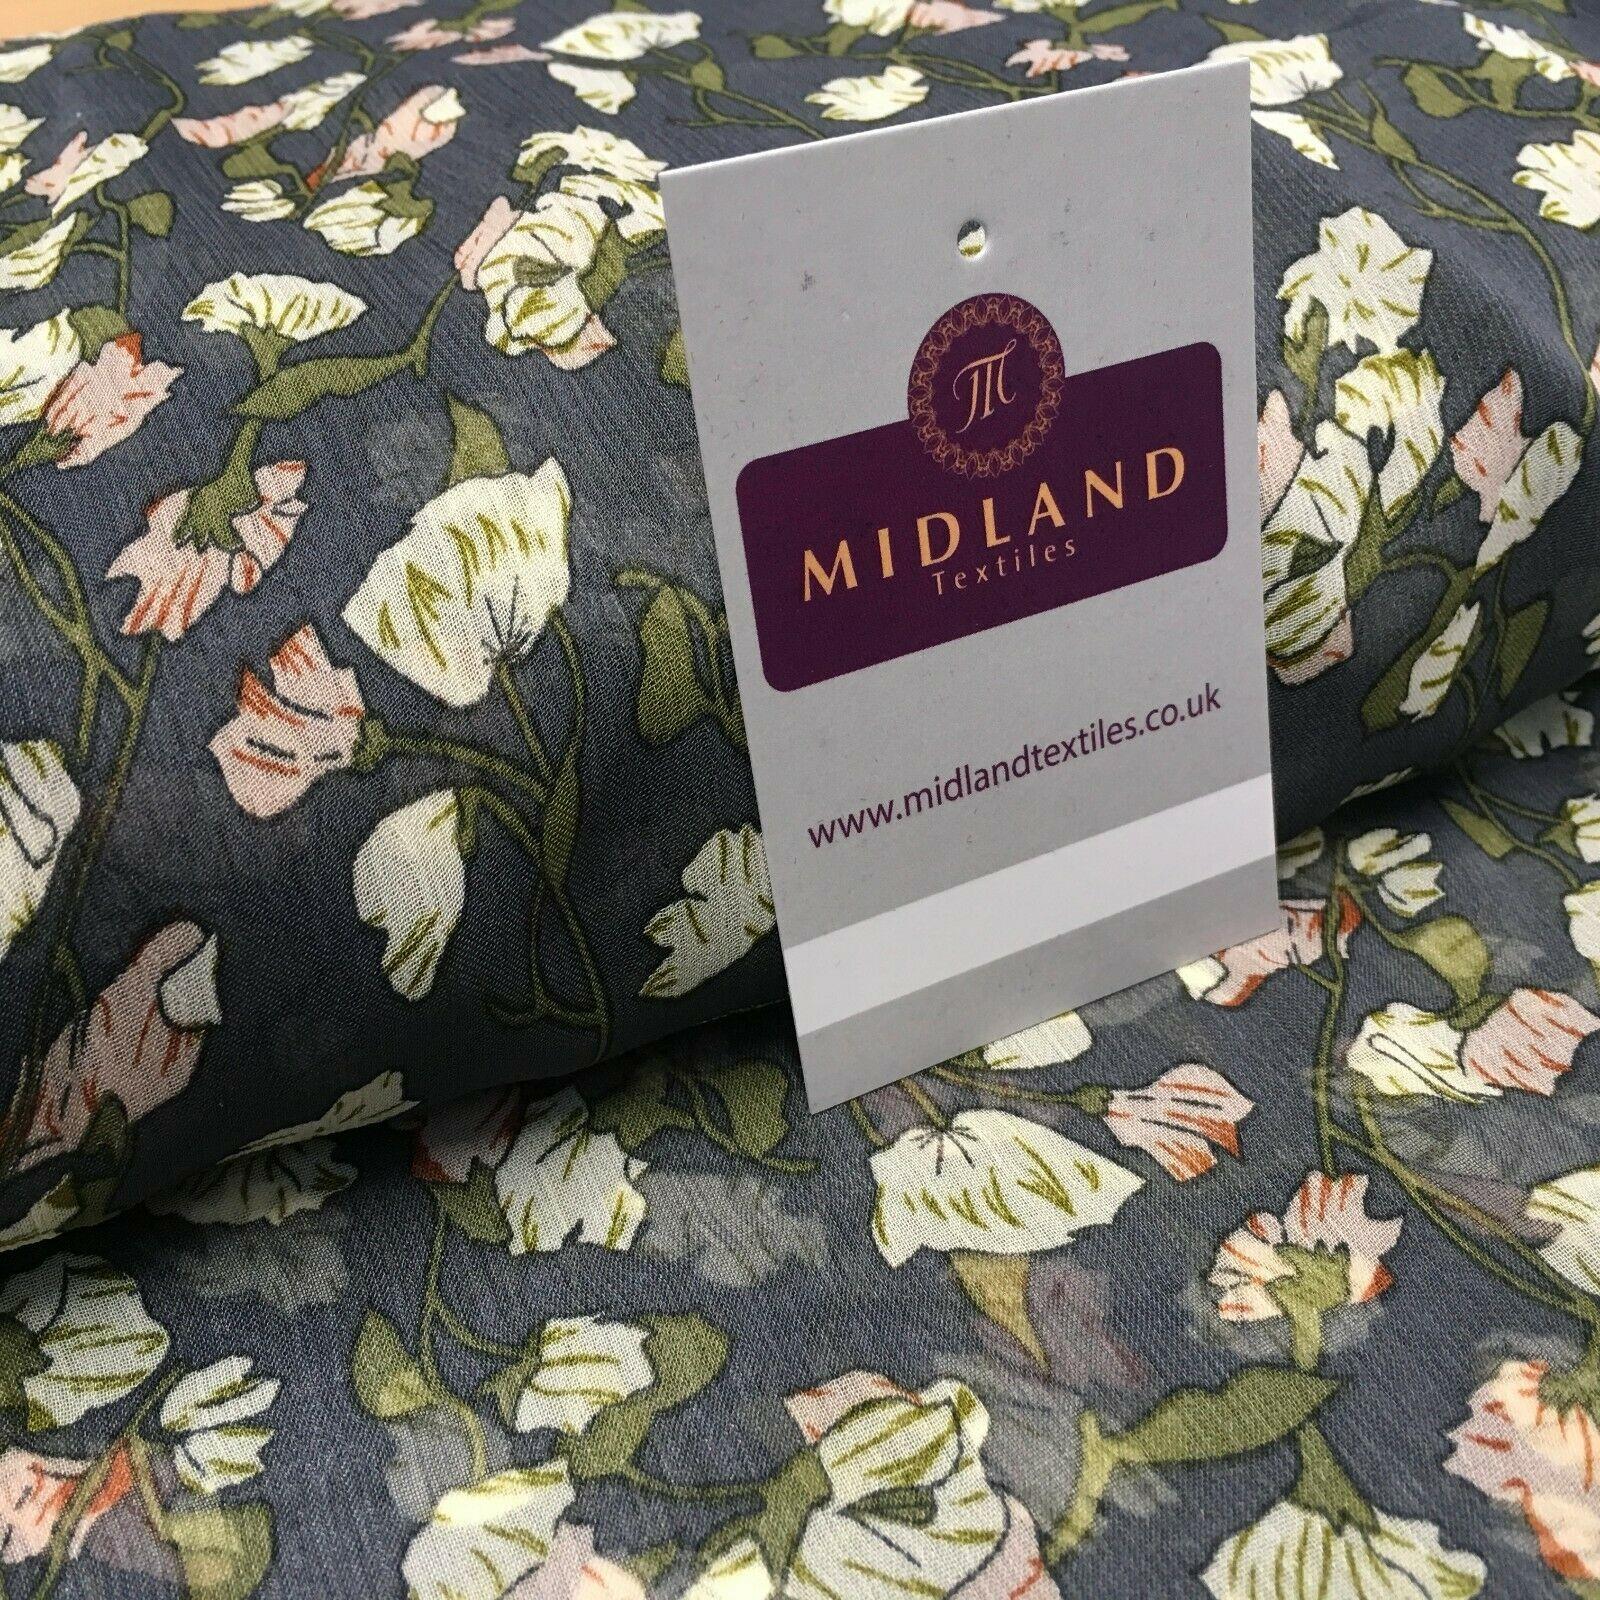 Grey Floral Printed Crinkle Georgette Chiffon Fabric 150cm wide MK1090-25